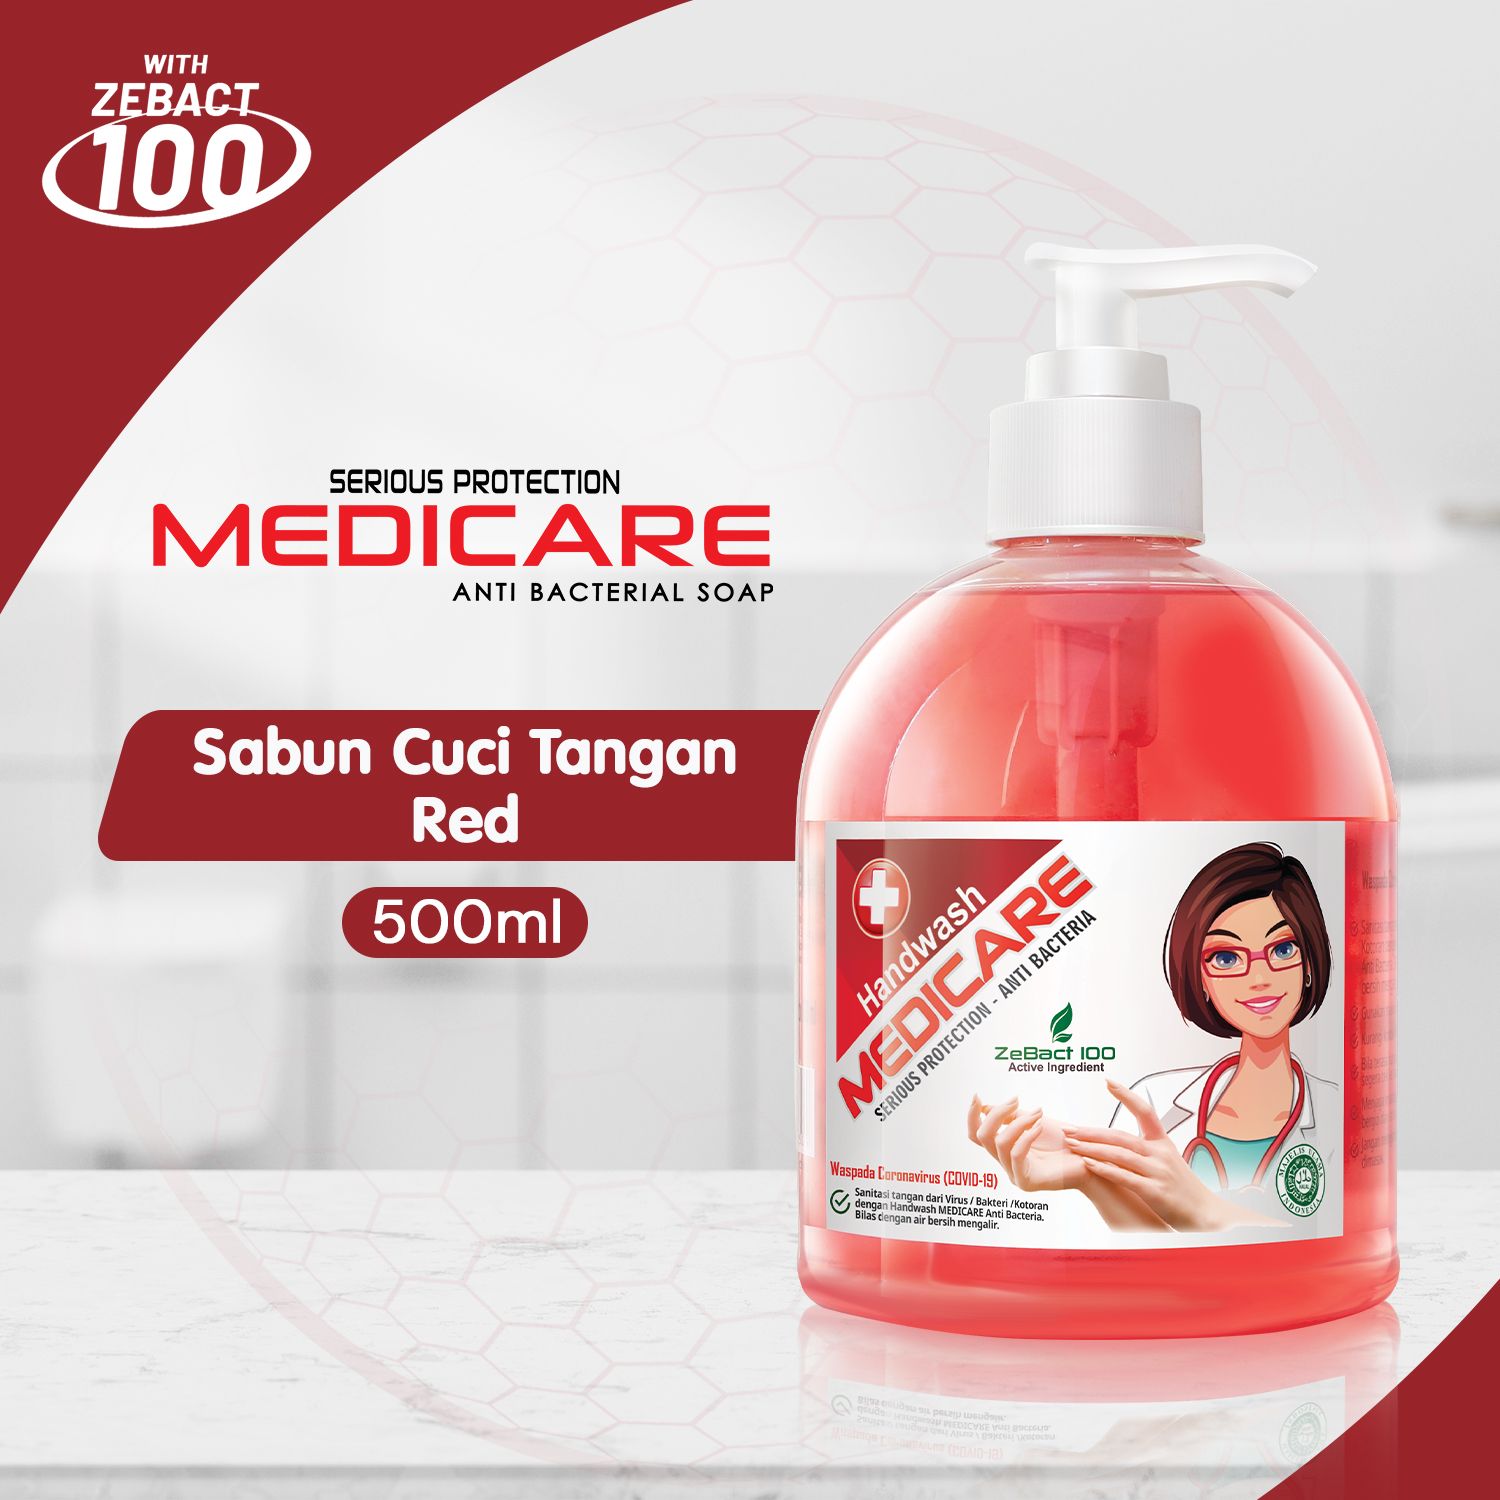 MEDICARE Sabun Cuci Tangan Antibakteri Botol Red 500mL - 1